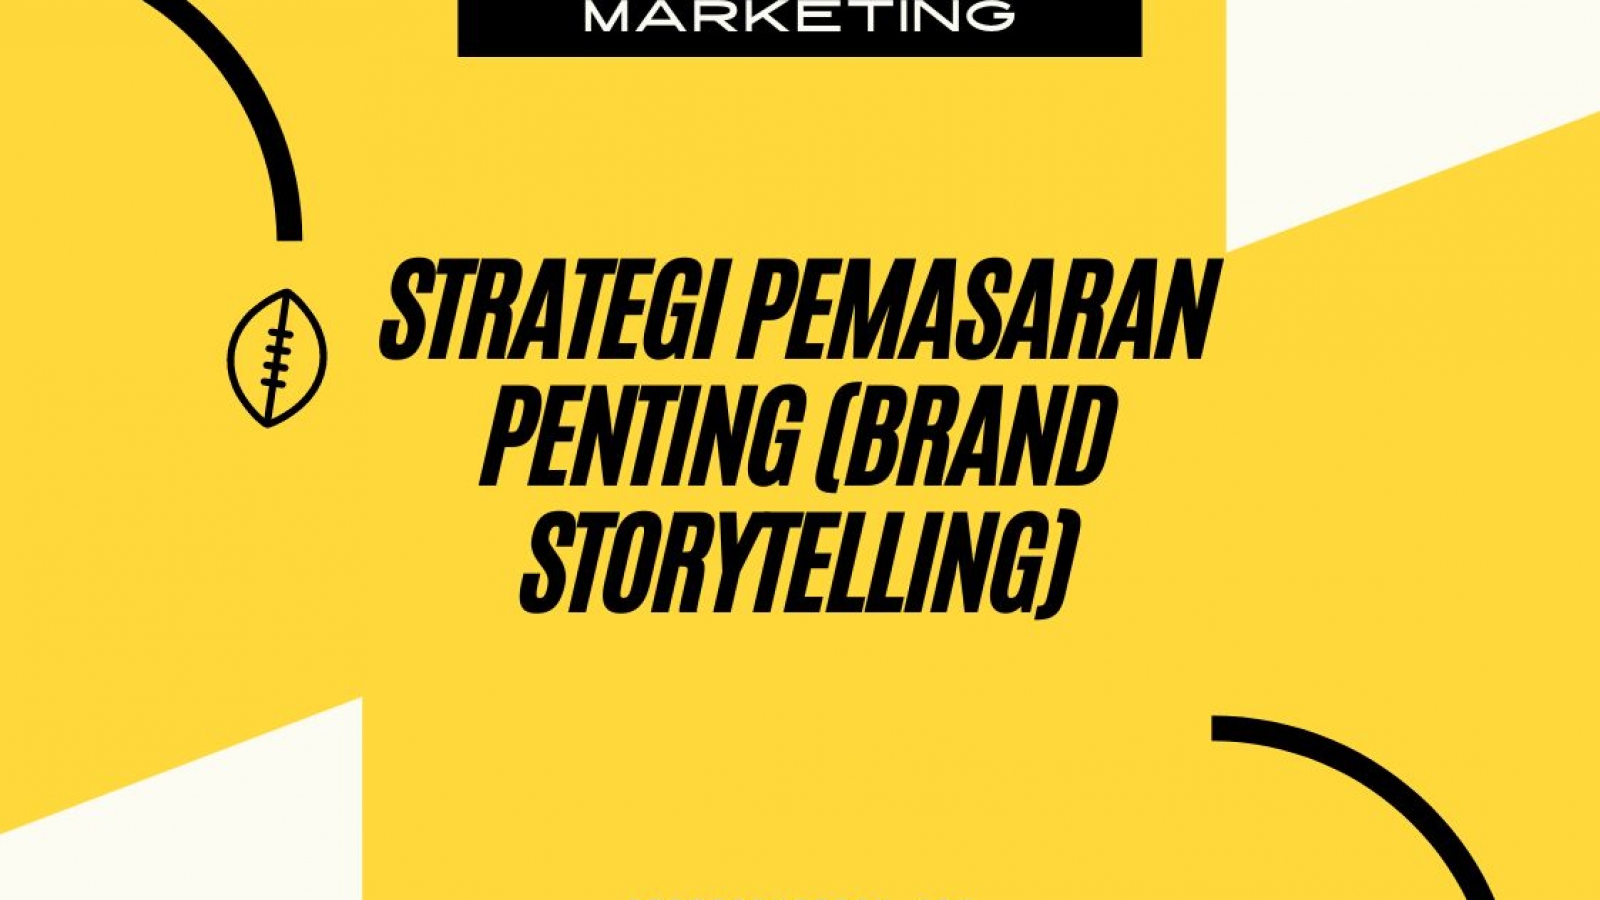 Strategi Pemasaran Penting (Brand Storytelling)